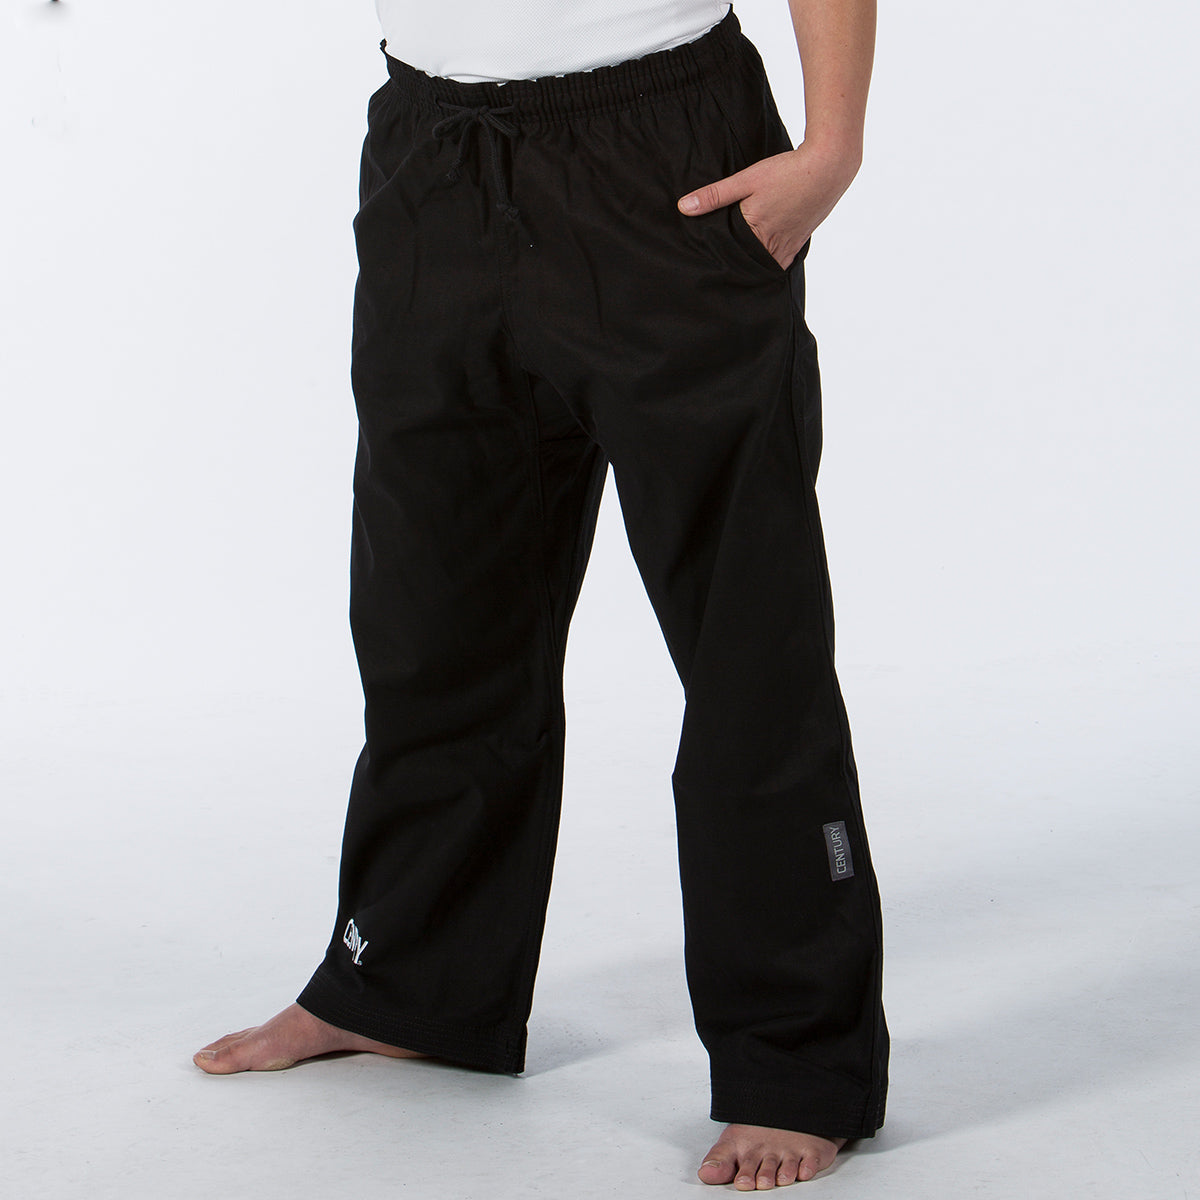 10 oz. Middleweight Brushed Cotton Elastic Waist Pants